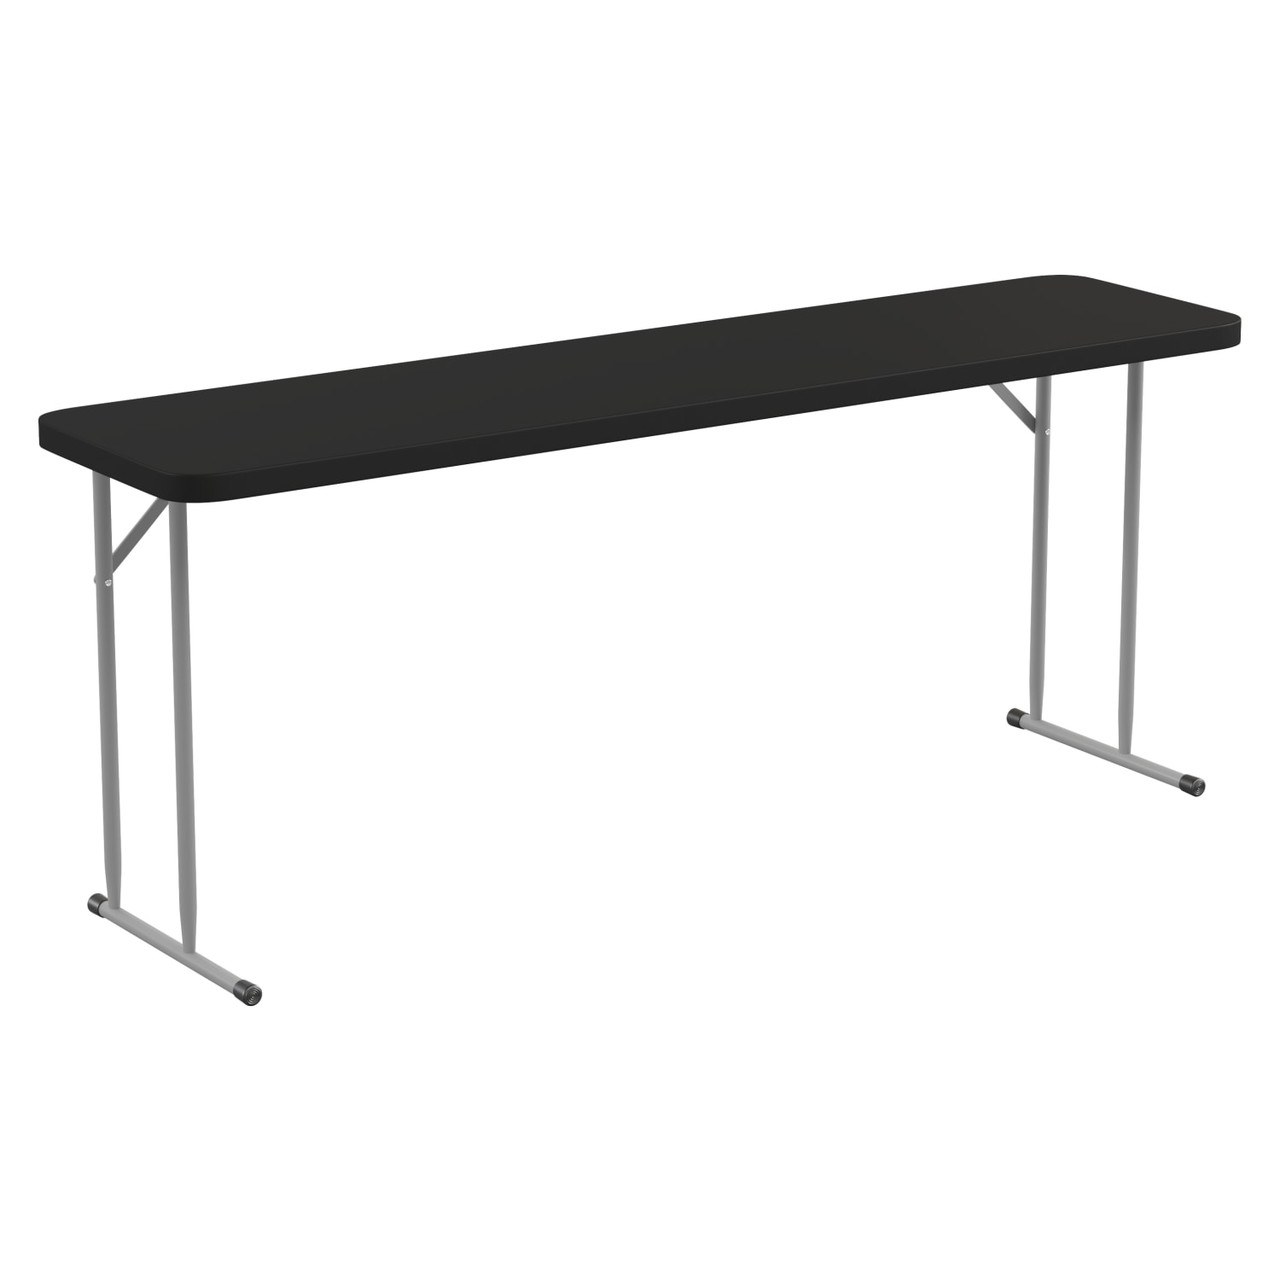 6-Foot Black Plastic Folding Training Table